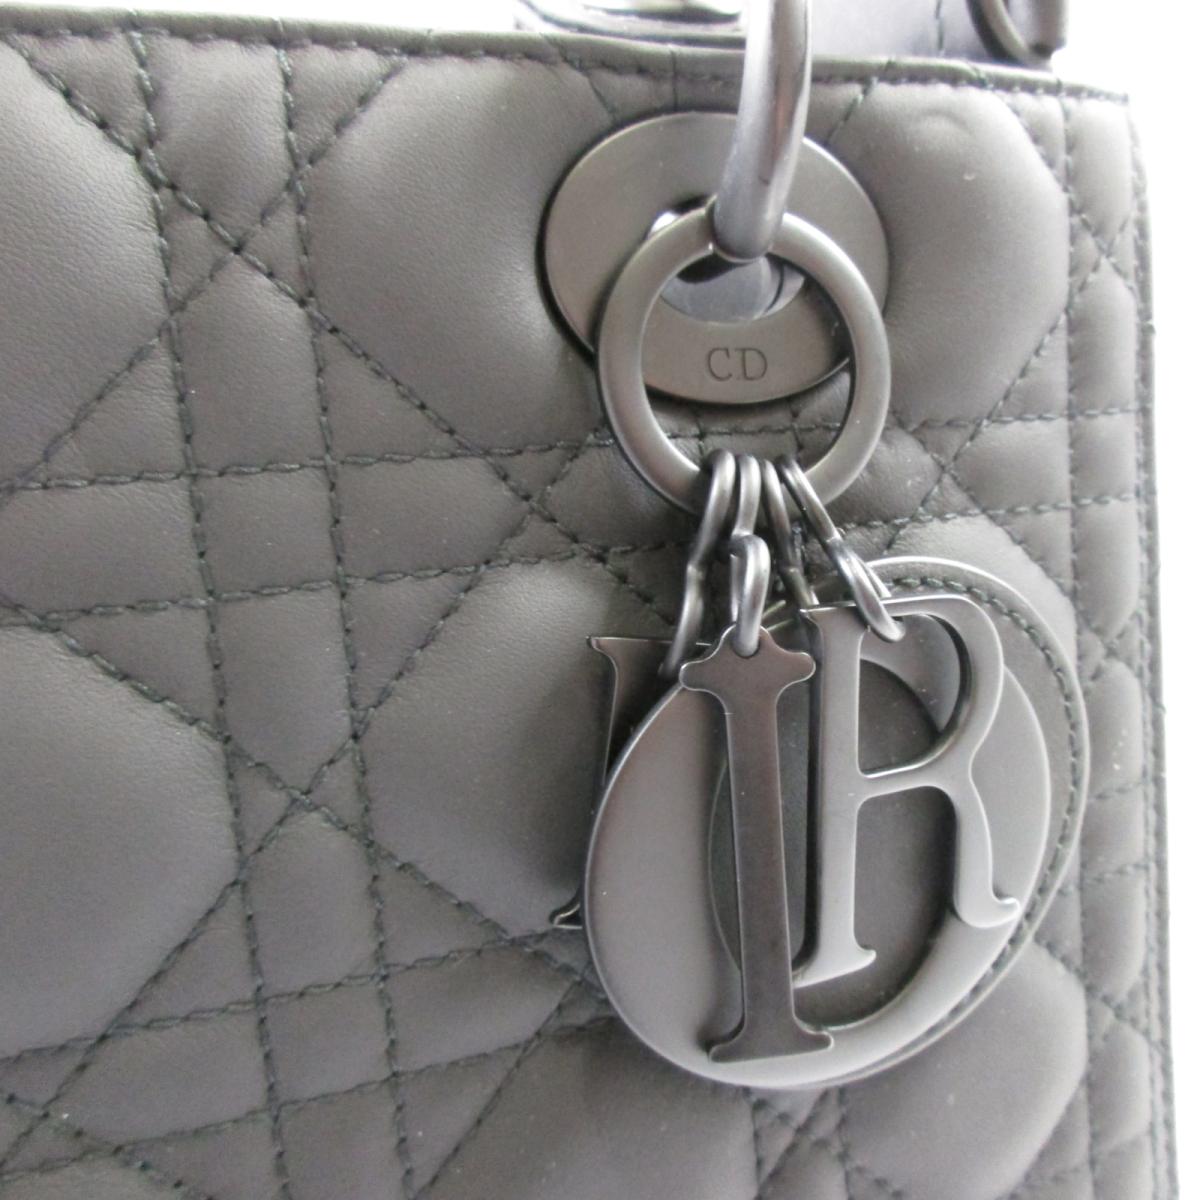  Ultramat Lady Dior Icon Bag 2way Shoulder Bag